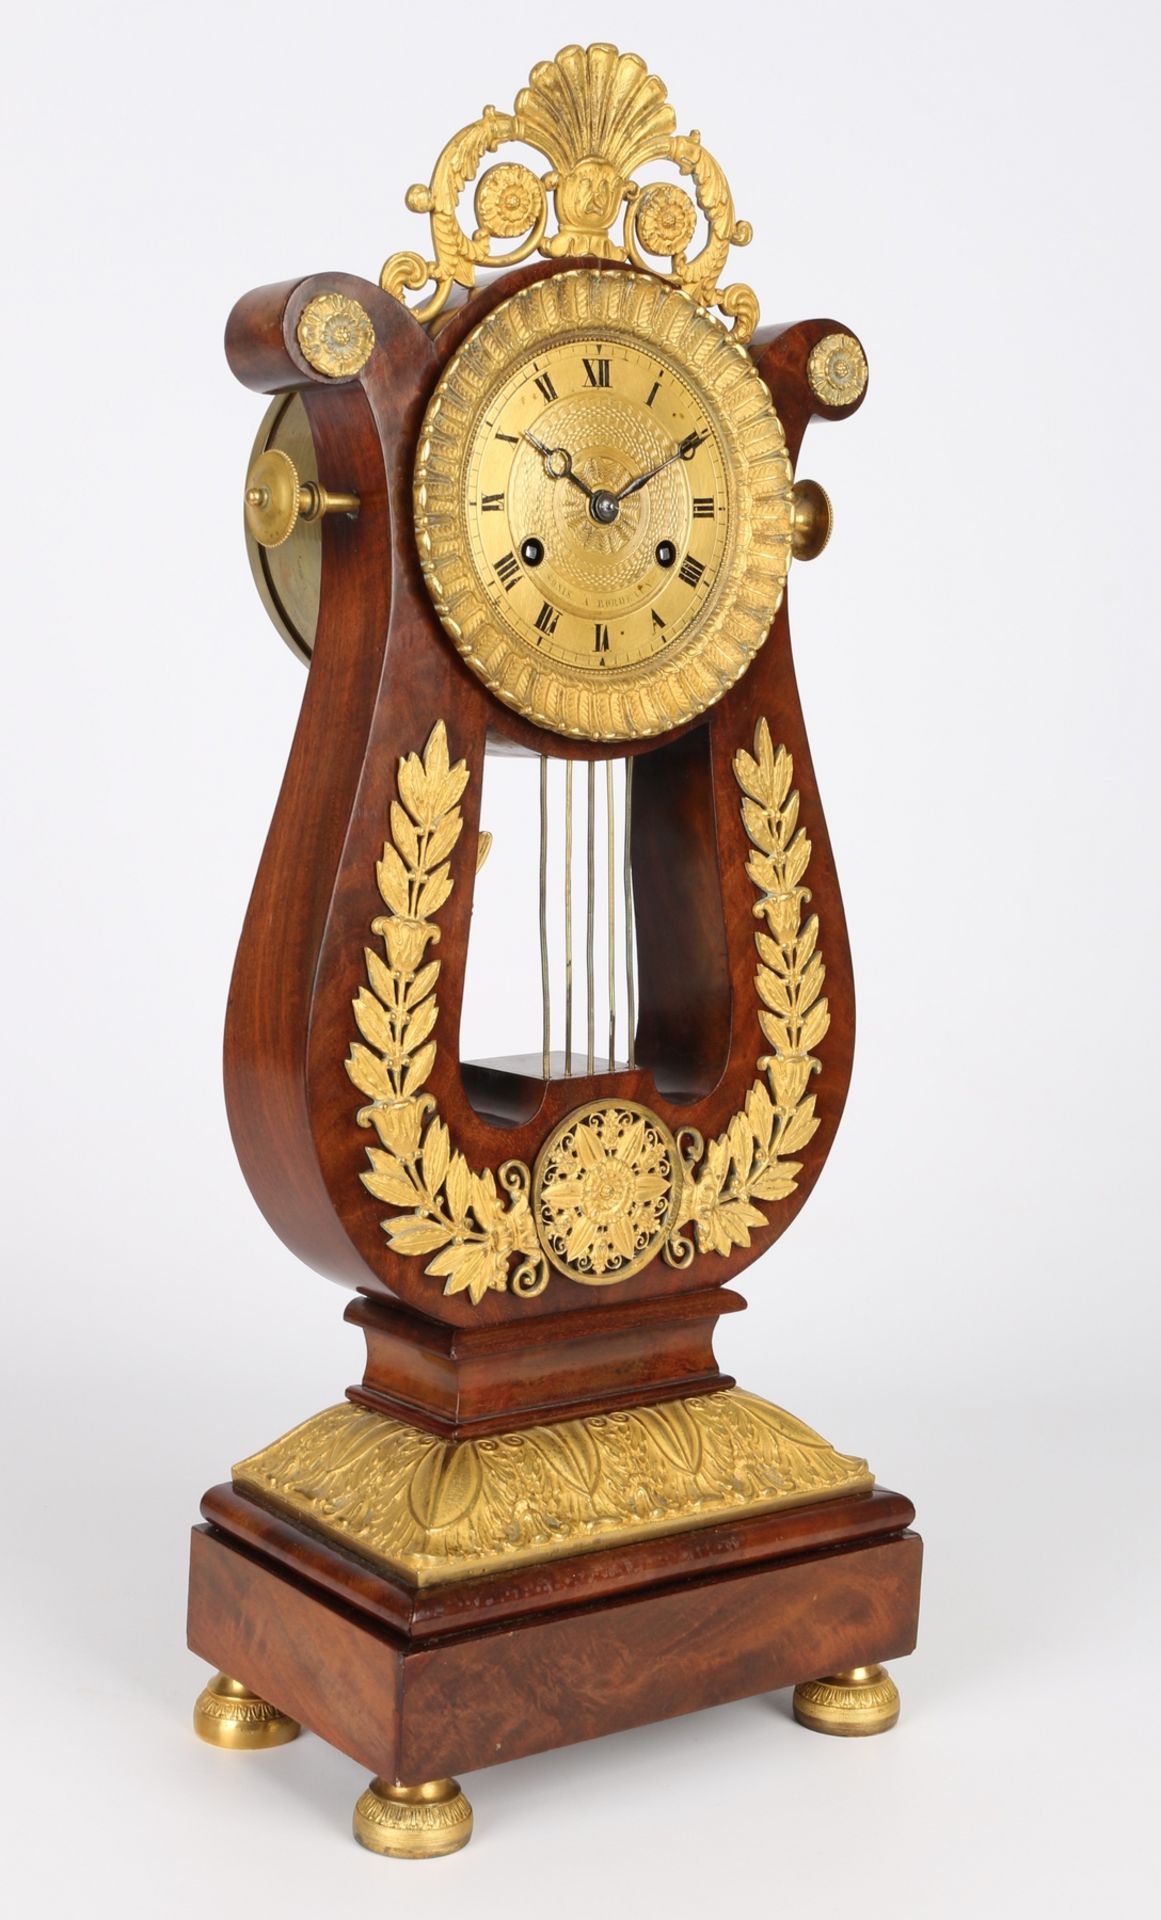 Lyra-Pendule / Kaminuhr, Frankreich um 1820, french lyra mantel clock ca.1820, - Bild 2 aus 4